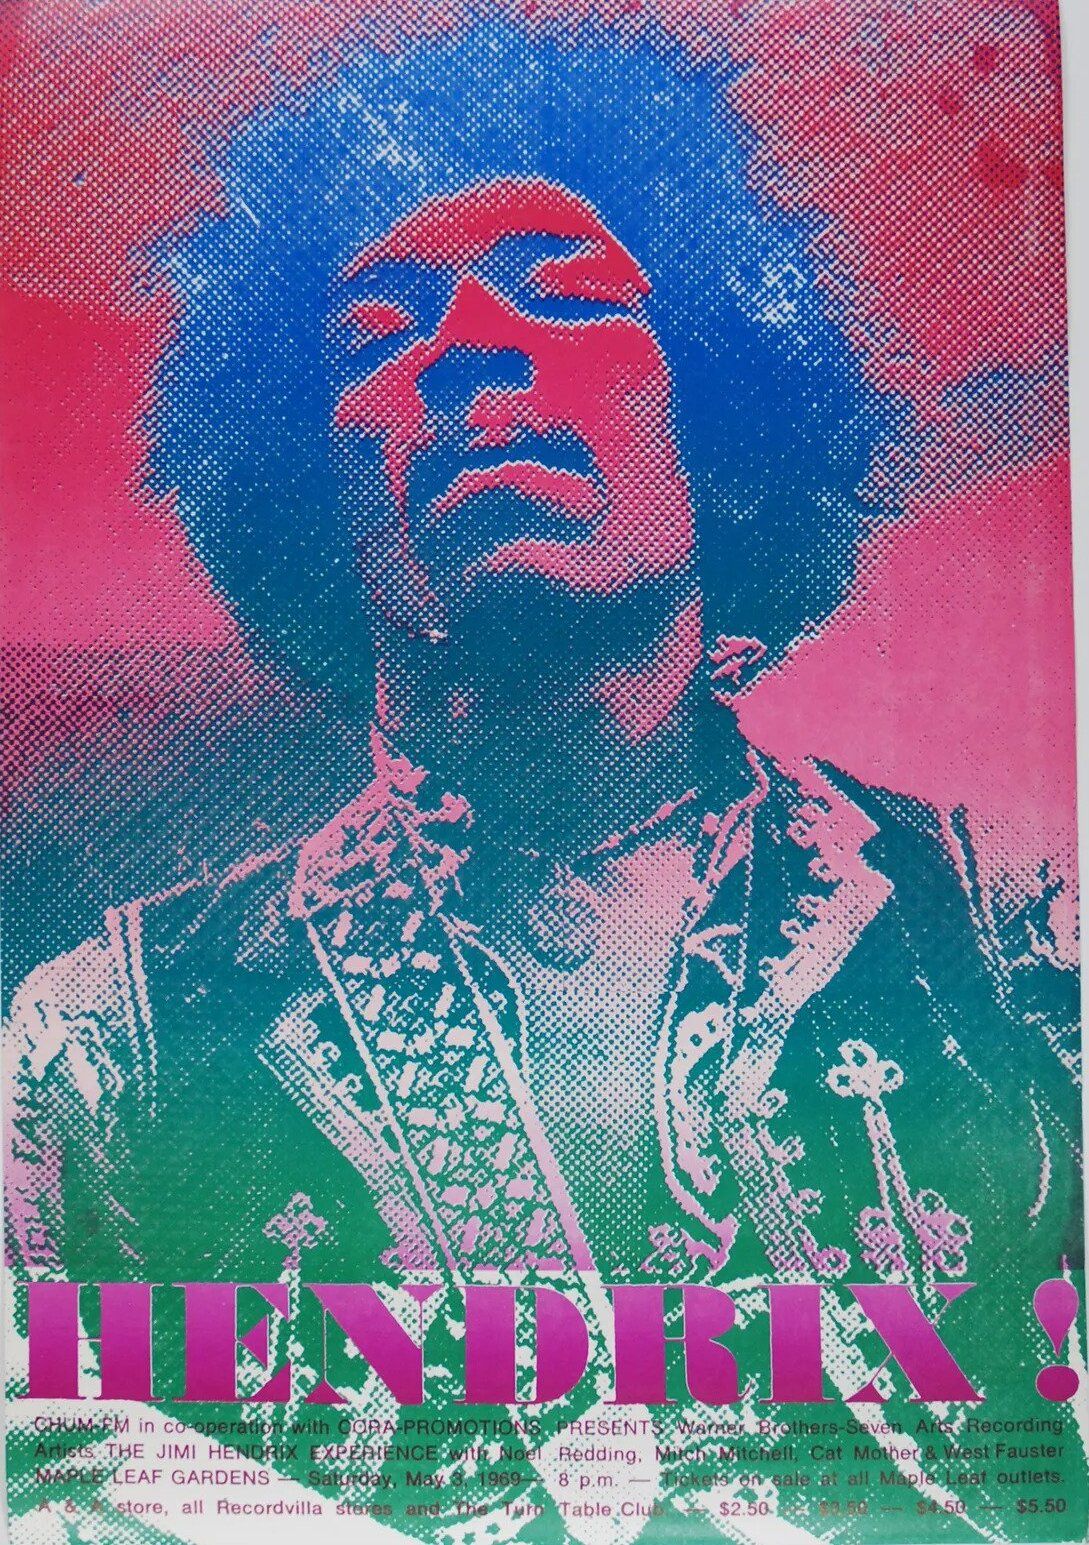 Jim Hendrix Maple Leaf Gardens 1969 Concert Poster